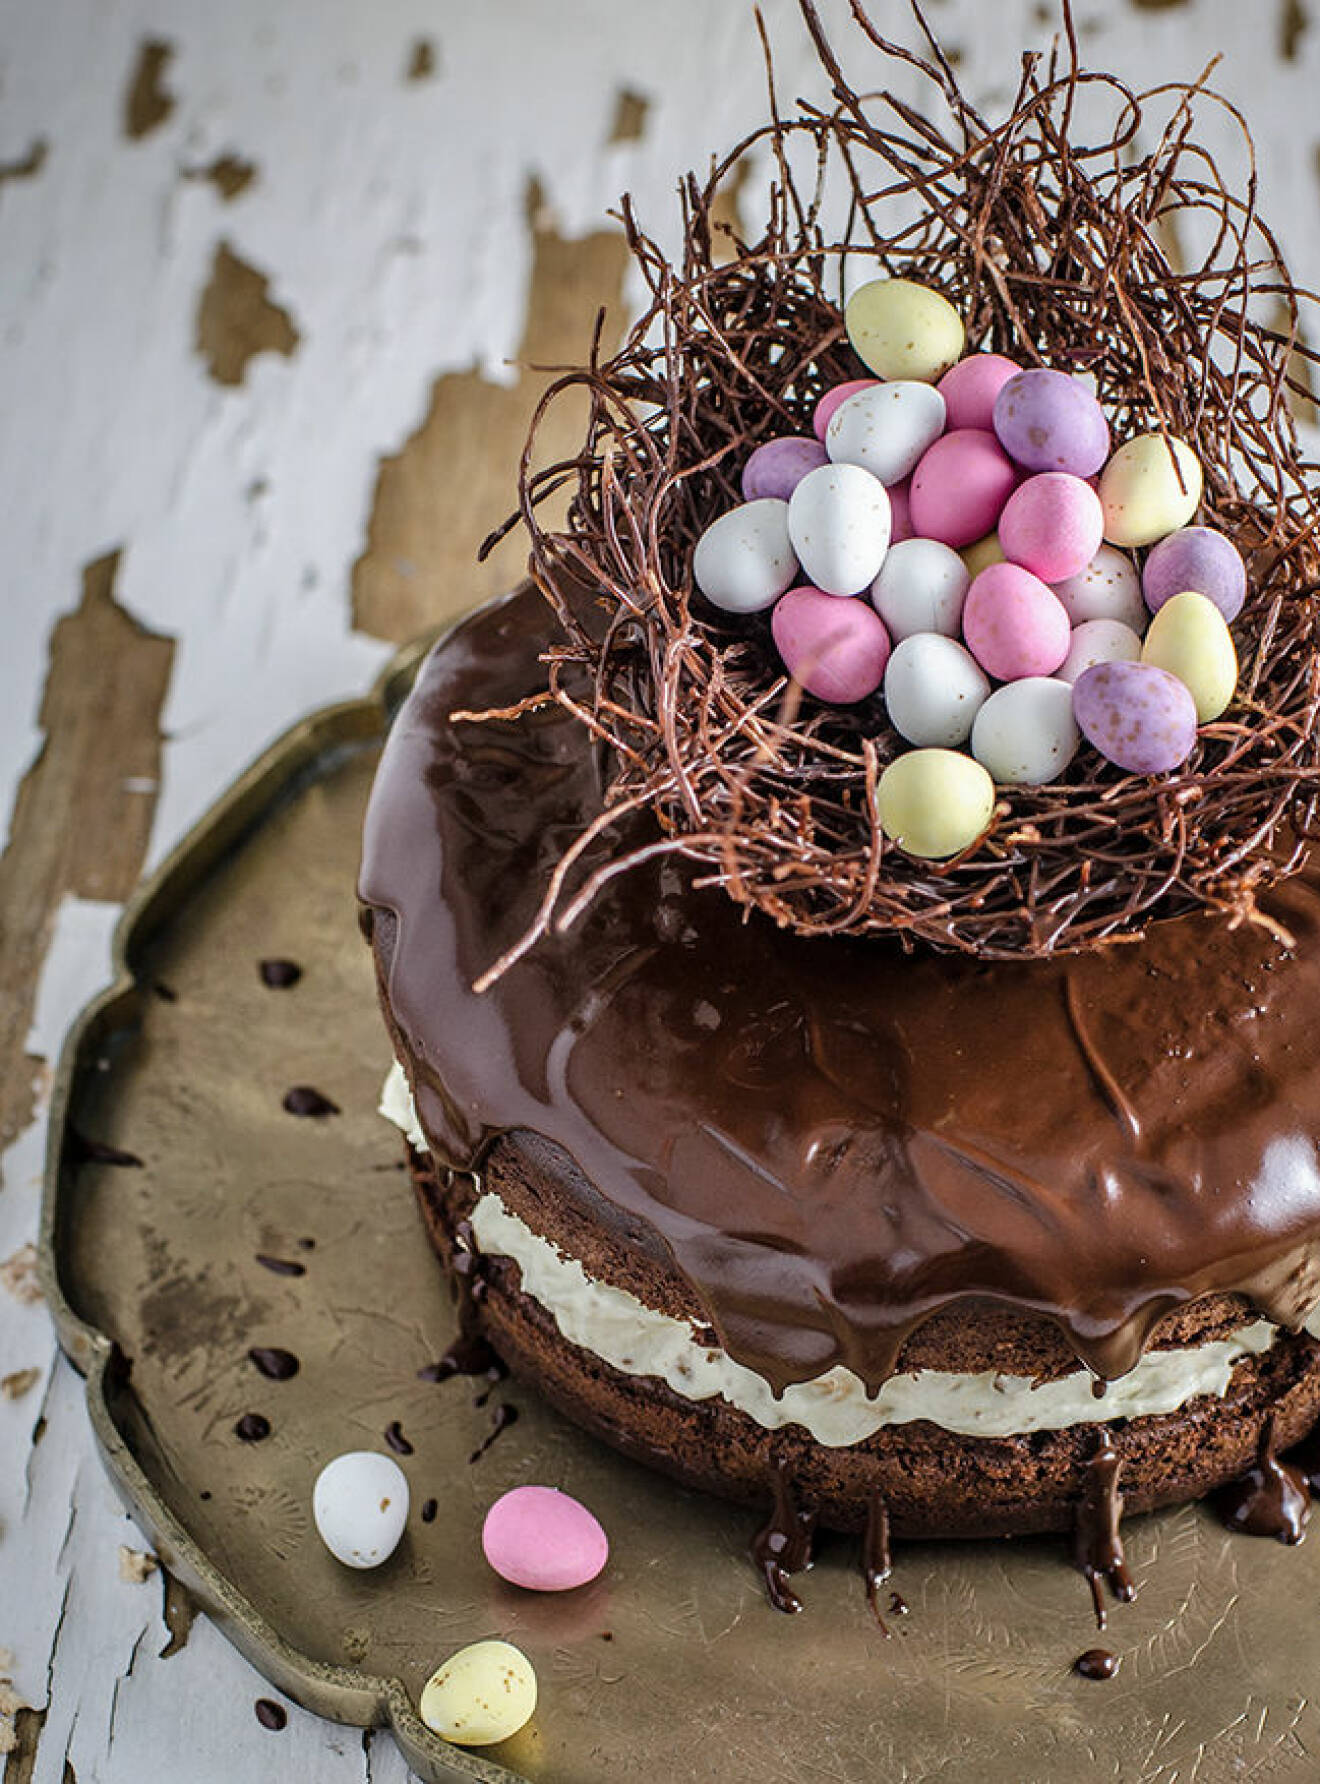 Chokladtårta med fågelbo på toppen, fågelbotårta till påsk